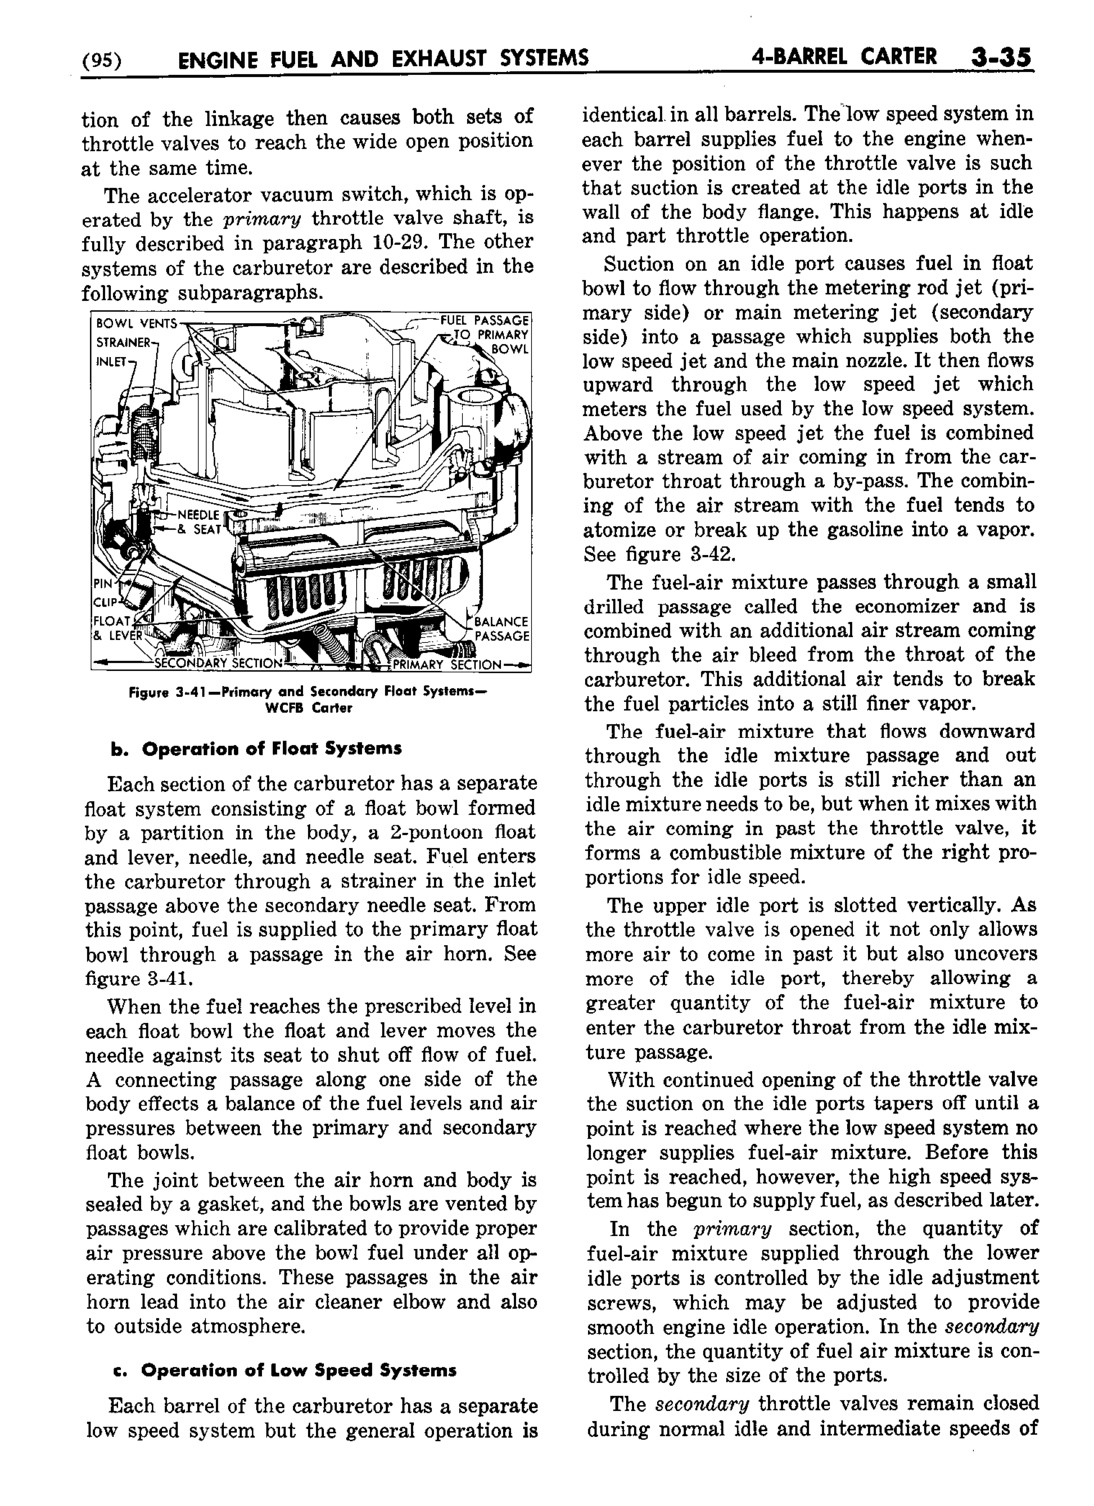 n_04 1953 Buick Shop Manual - Engine Fuel & Exhaust-035-035.jpg